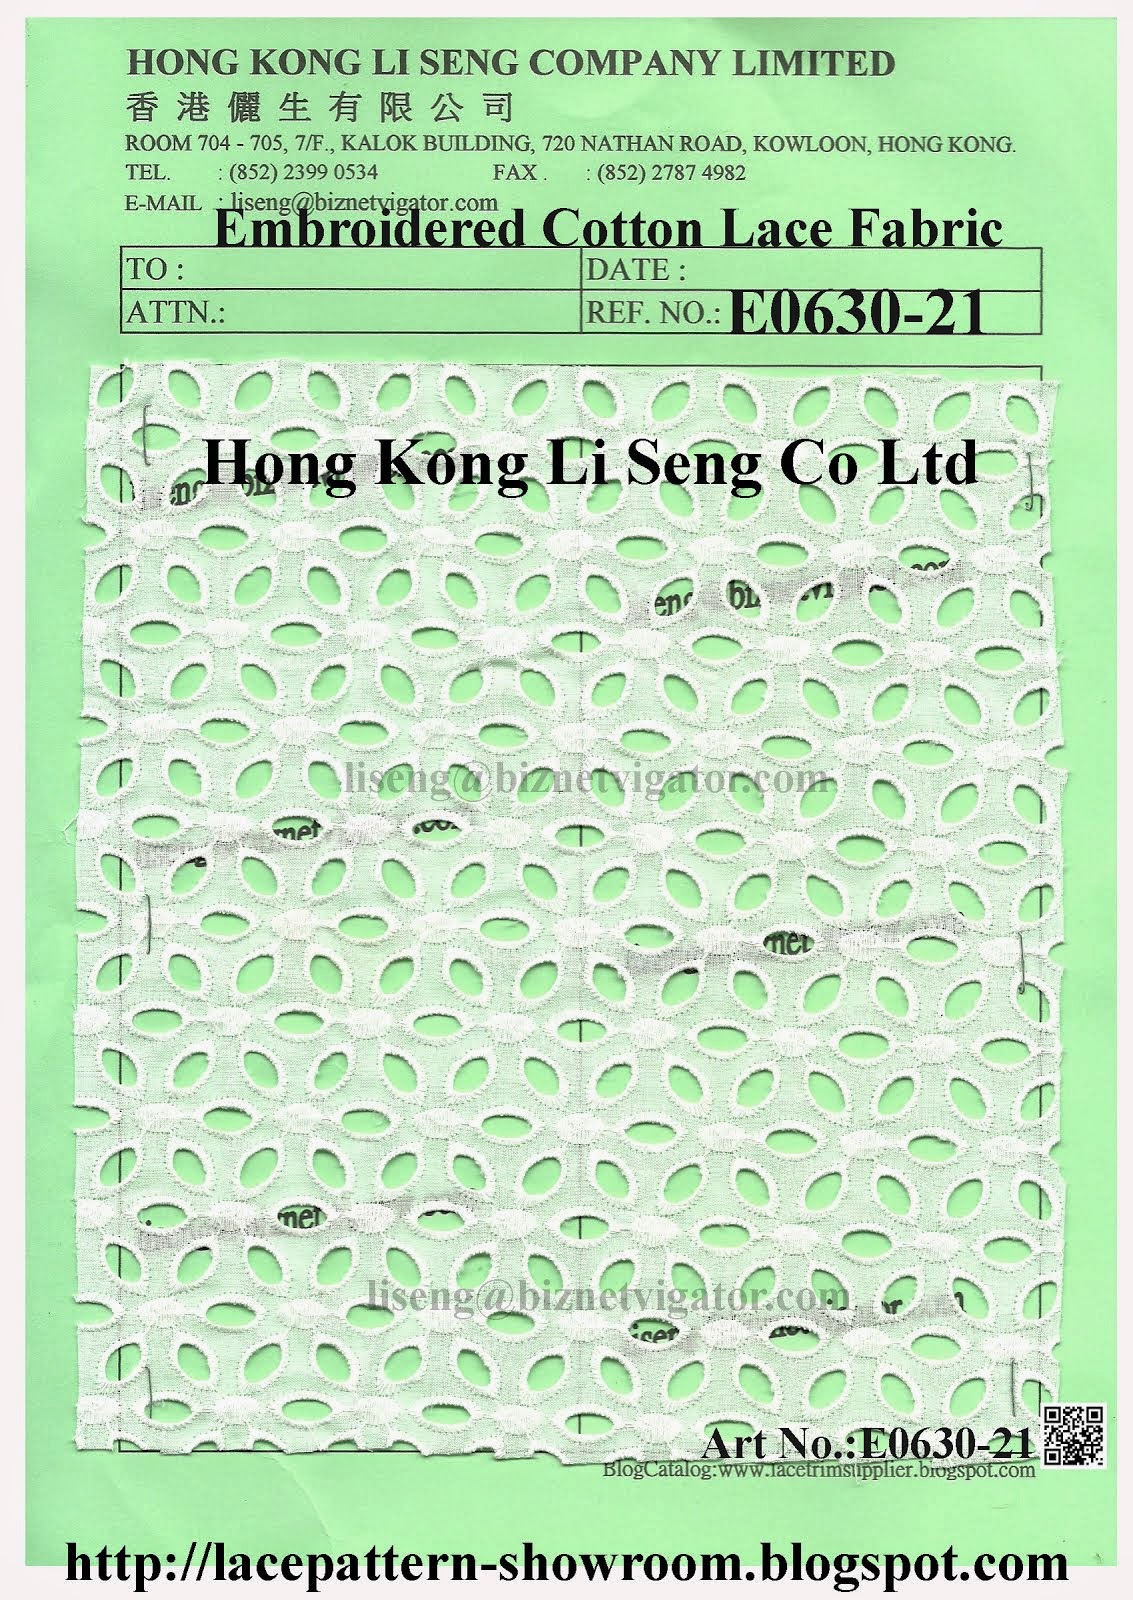 New Cotton Lace Fabric Pattern Manufacturer Wholesaler And Supplier - Hong Kong Li Seng Co Ltd